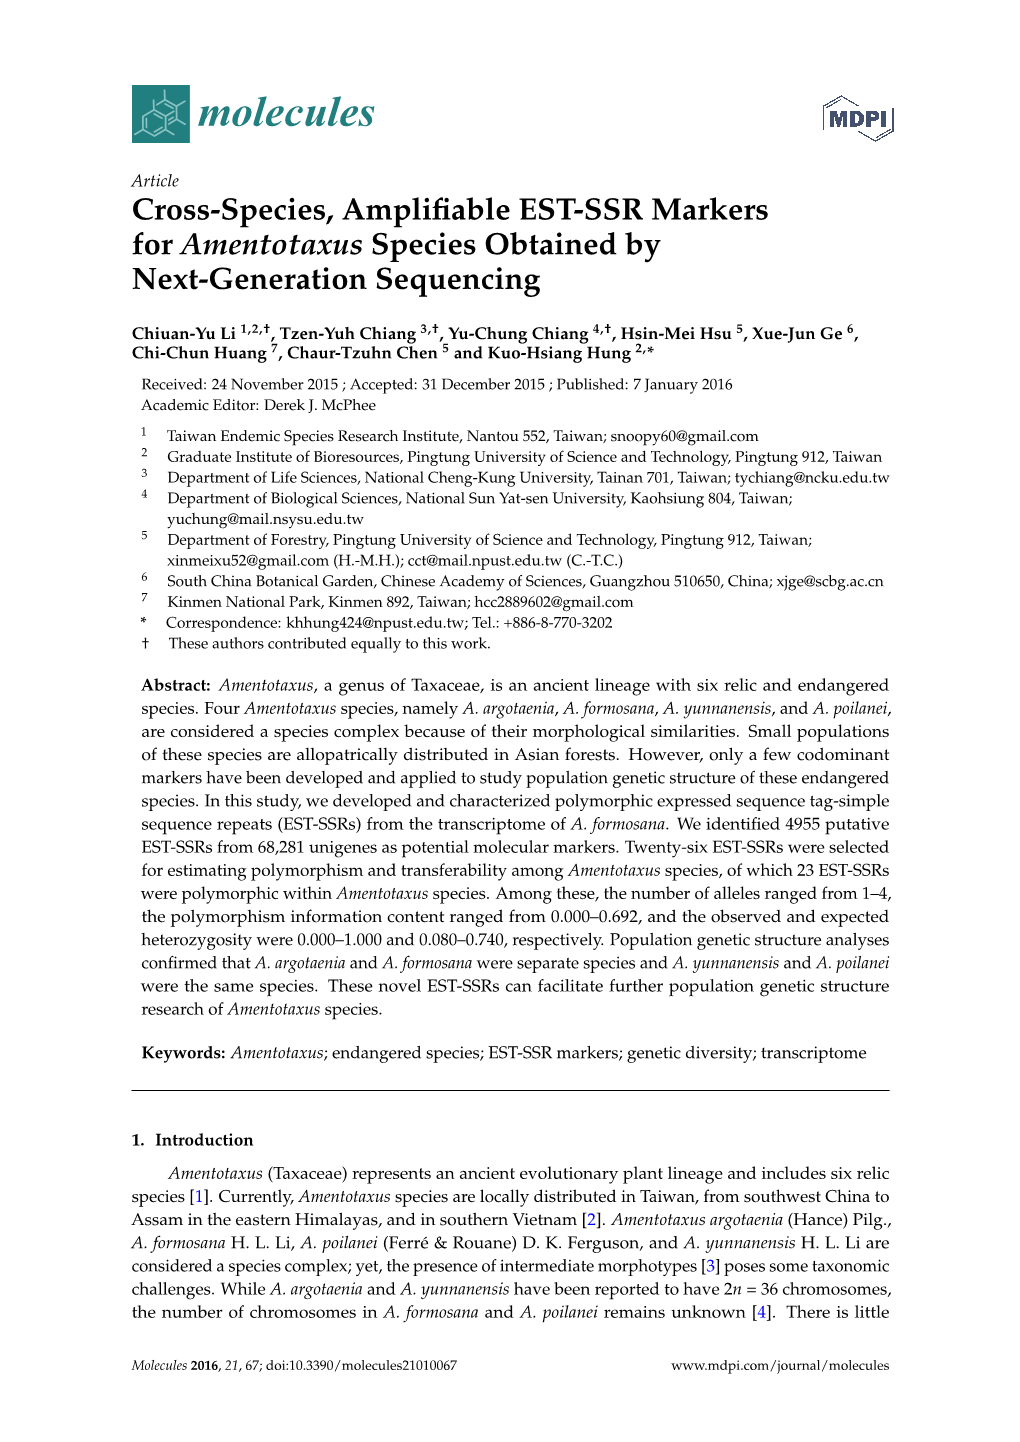 Cross-Species, Amplifiable EST-SSR Markers for Amentotaxus Species